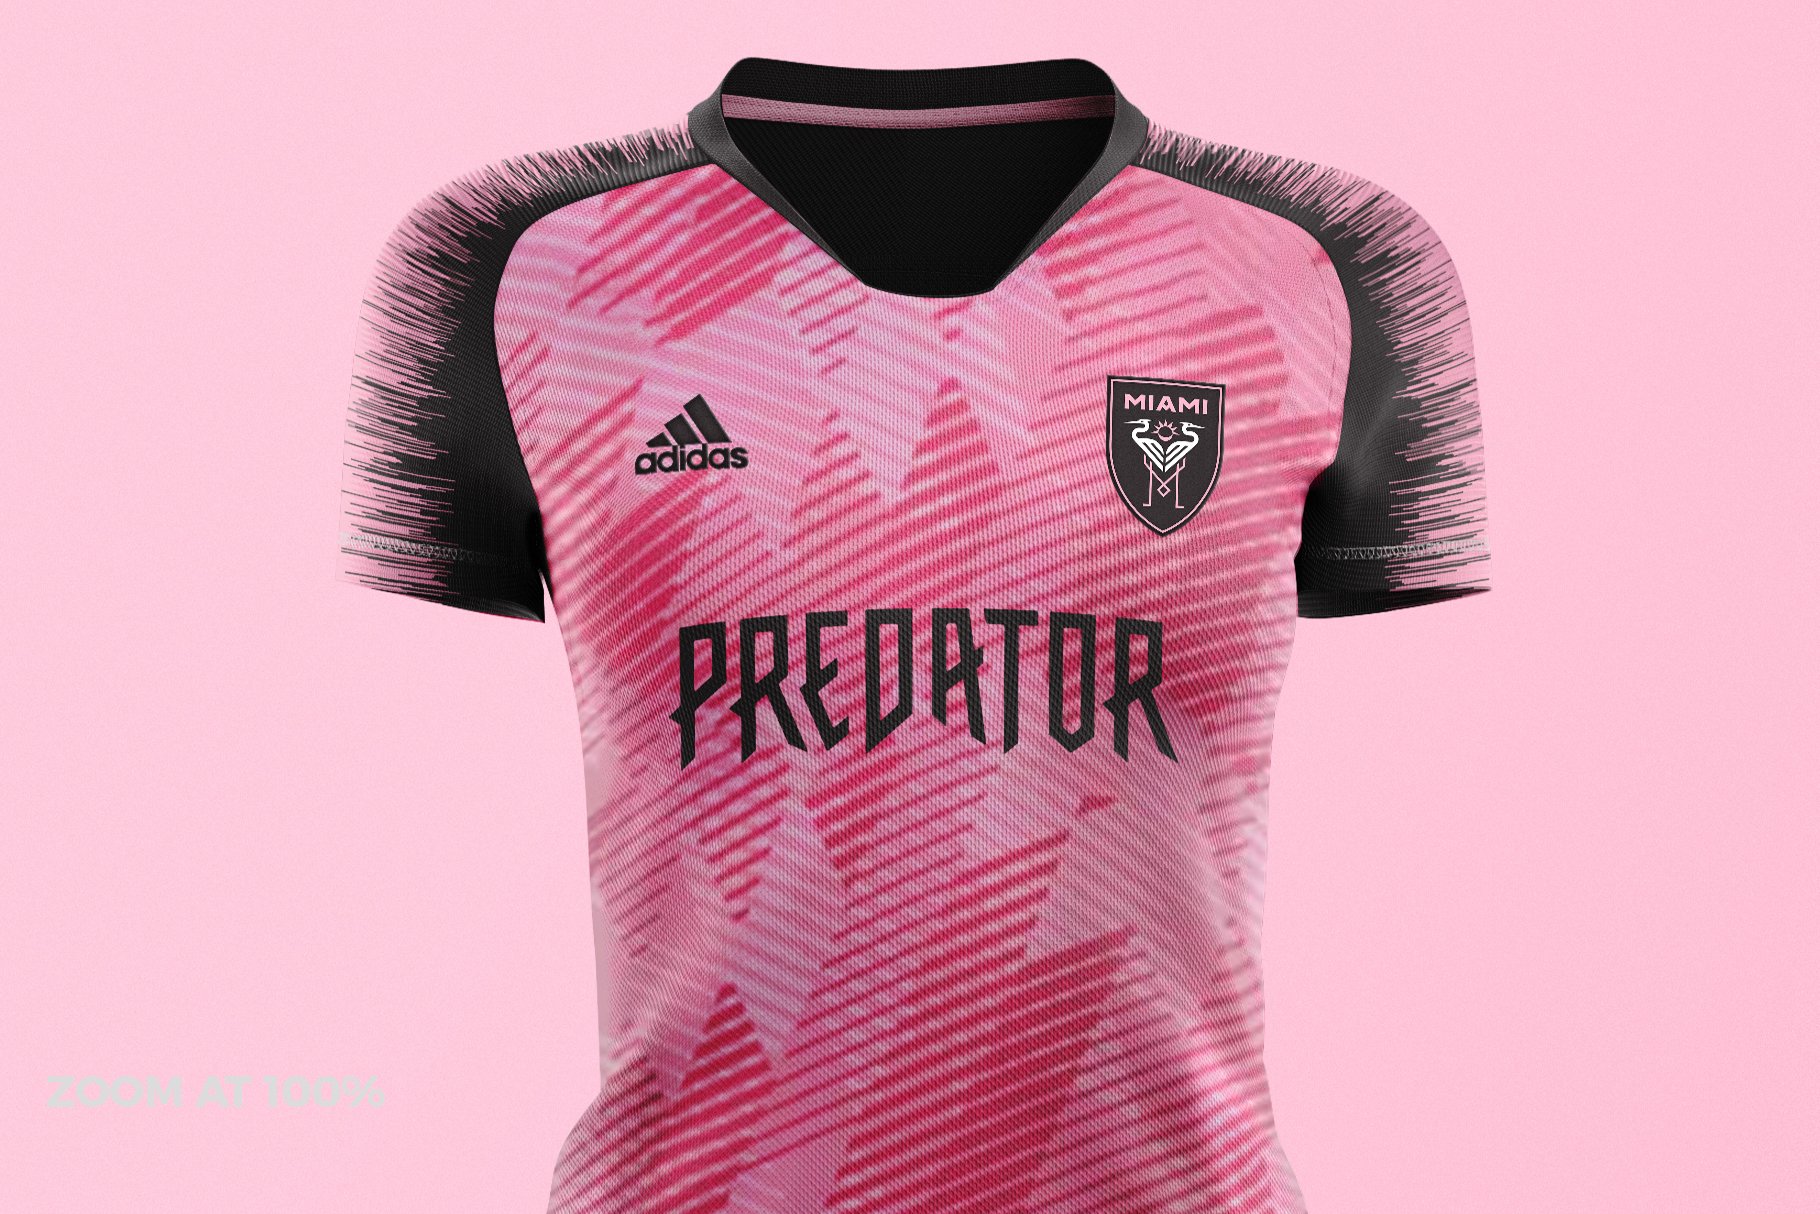 Women's Soccer Kit Mockup - Front preview image.